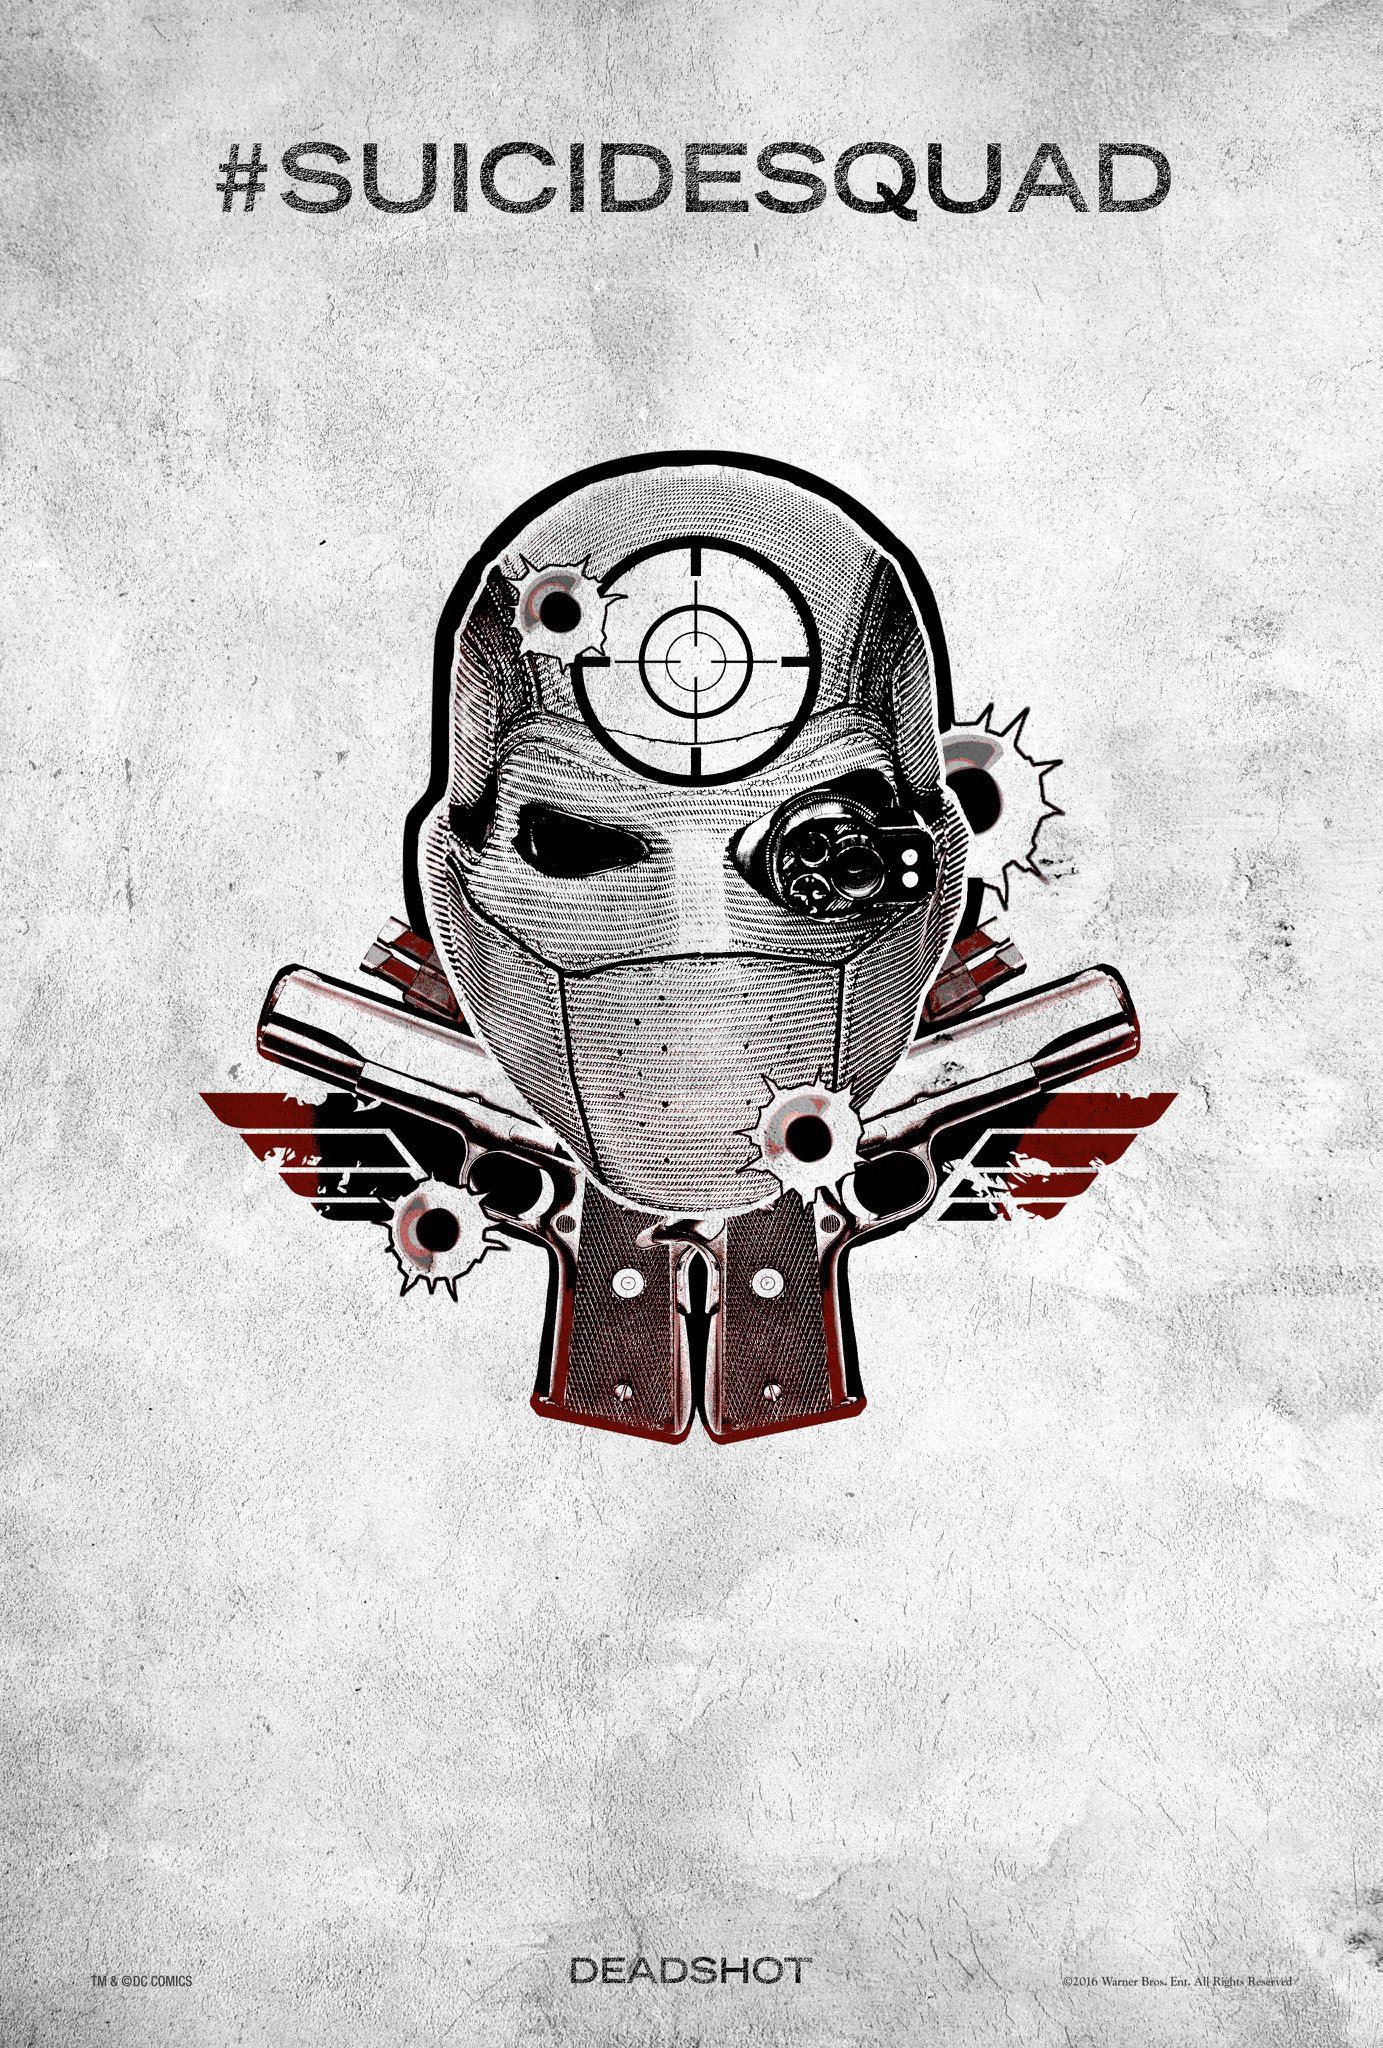 Deadshot #1